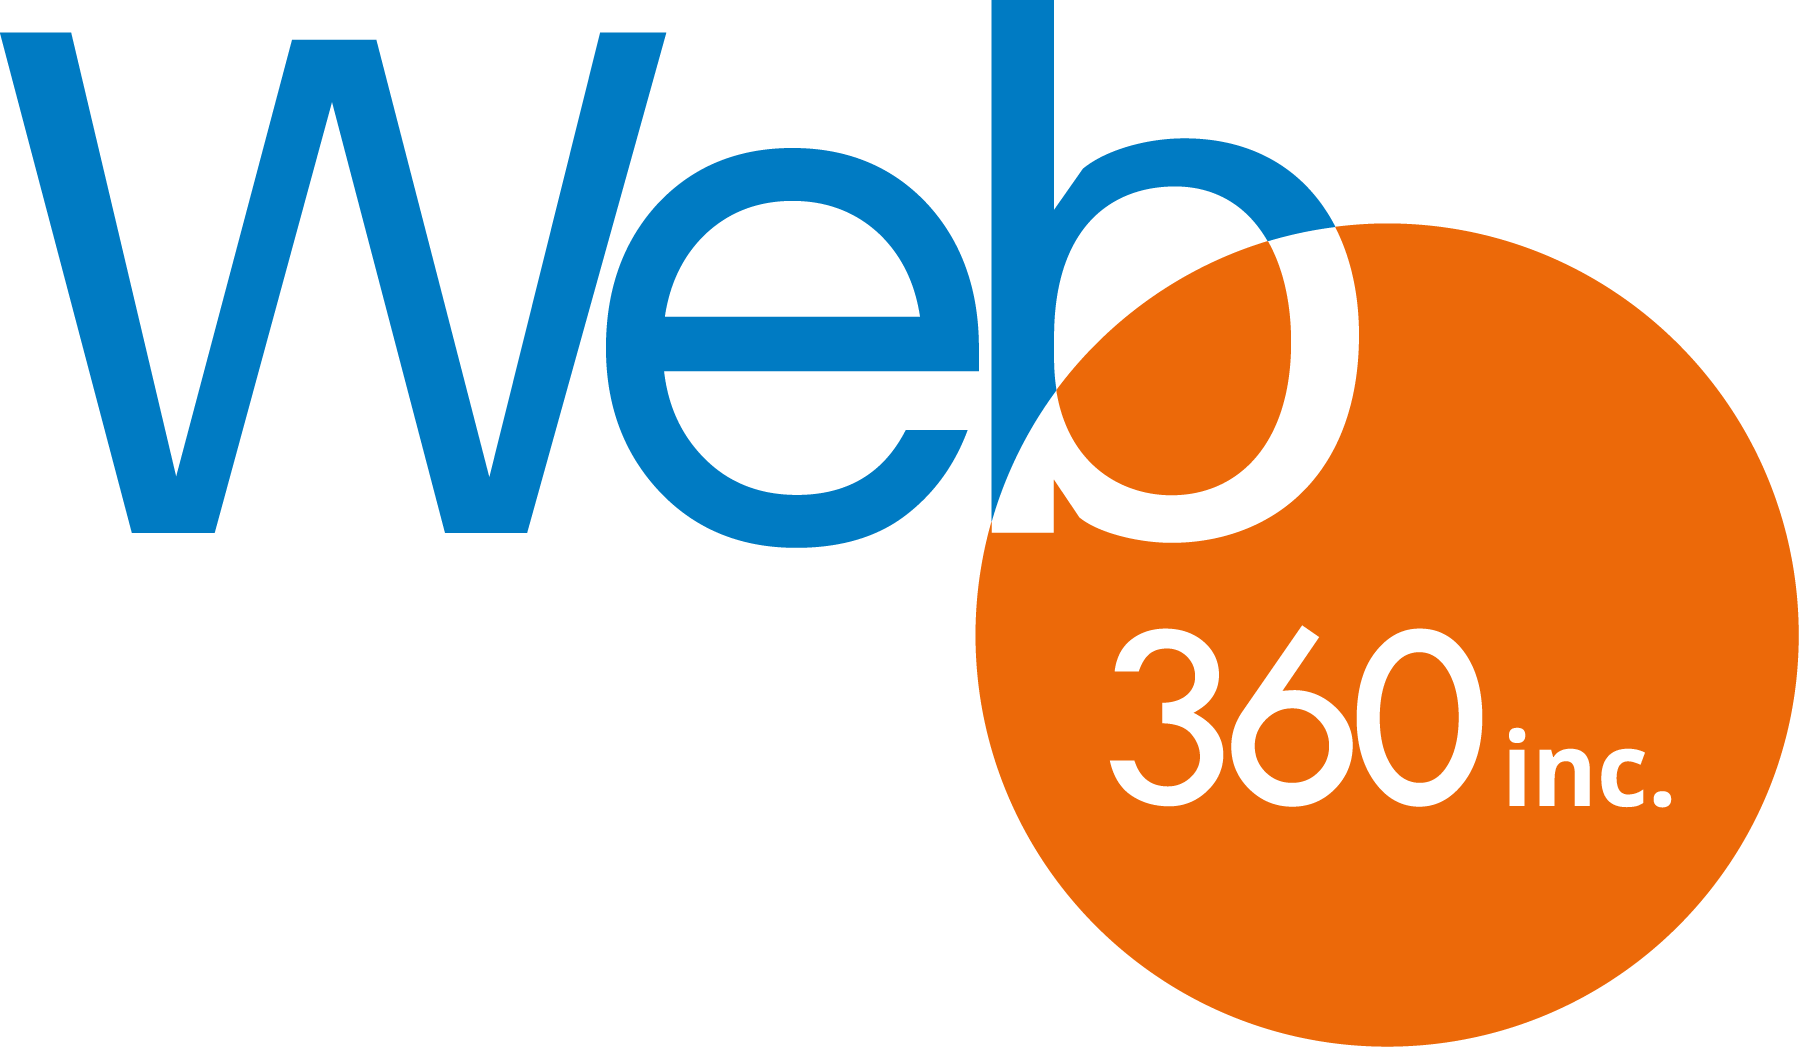 Web 360 inc.